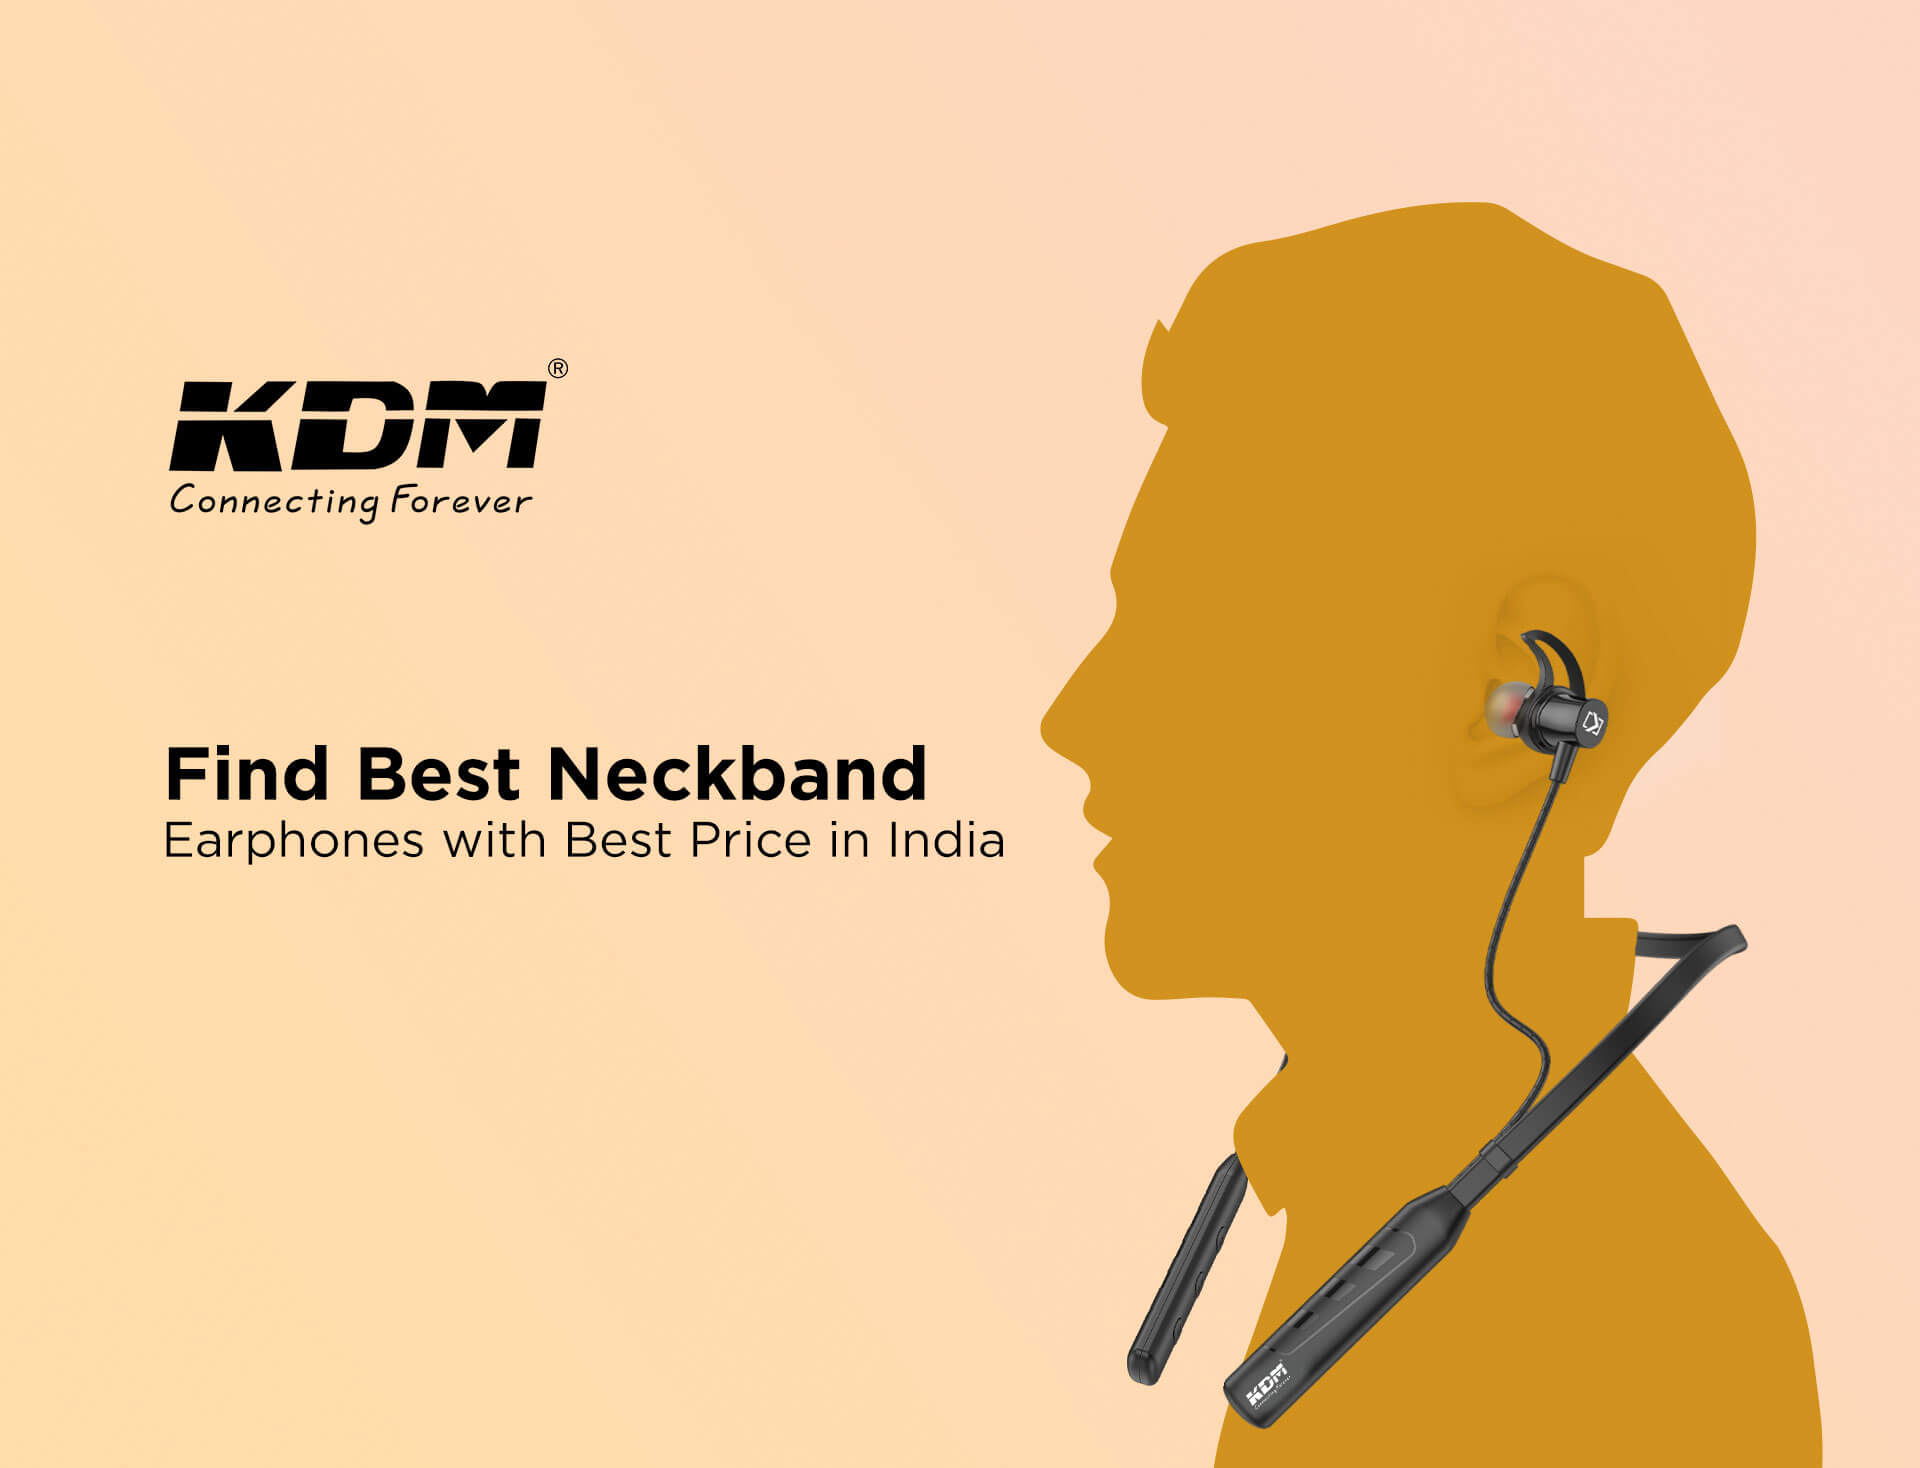 Find Best Neckband Earphones with Best Price in India